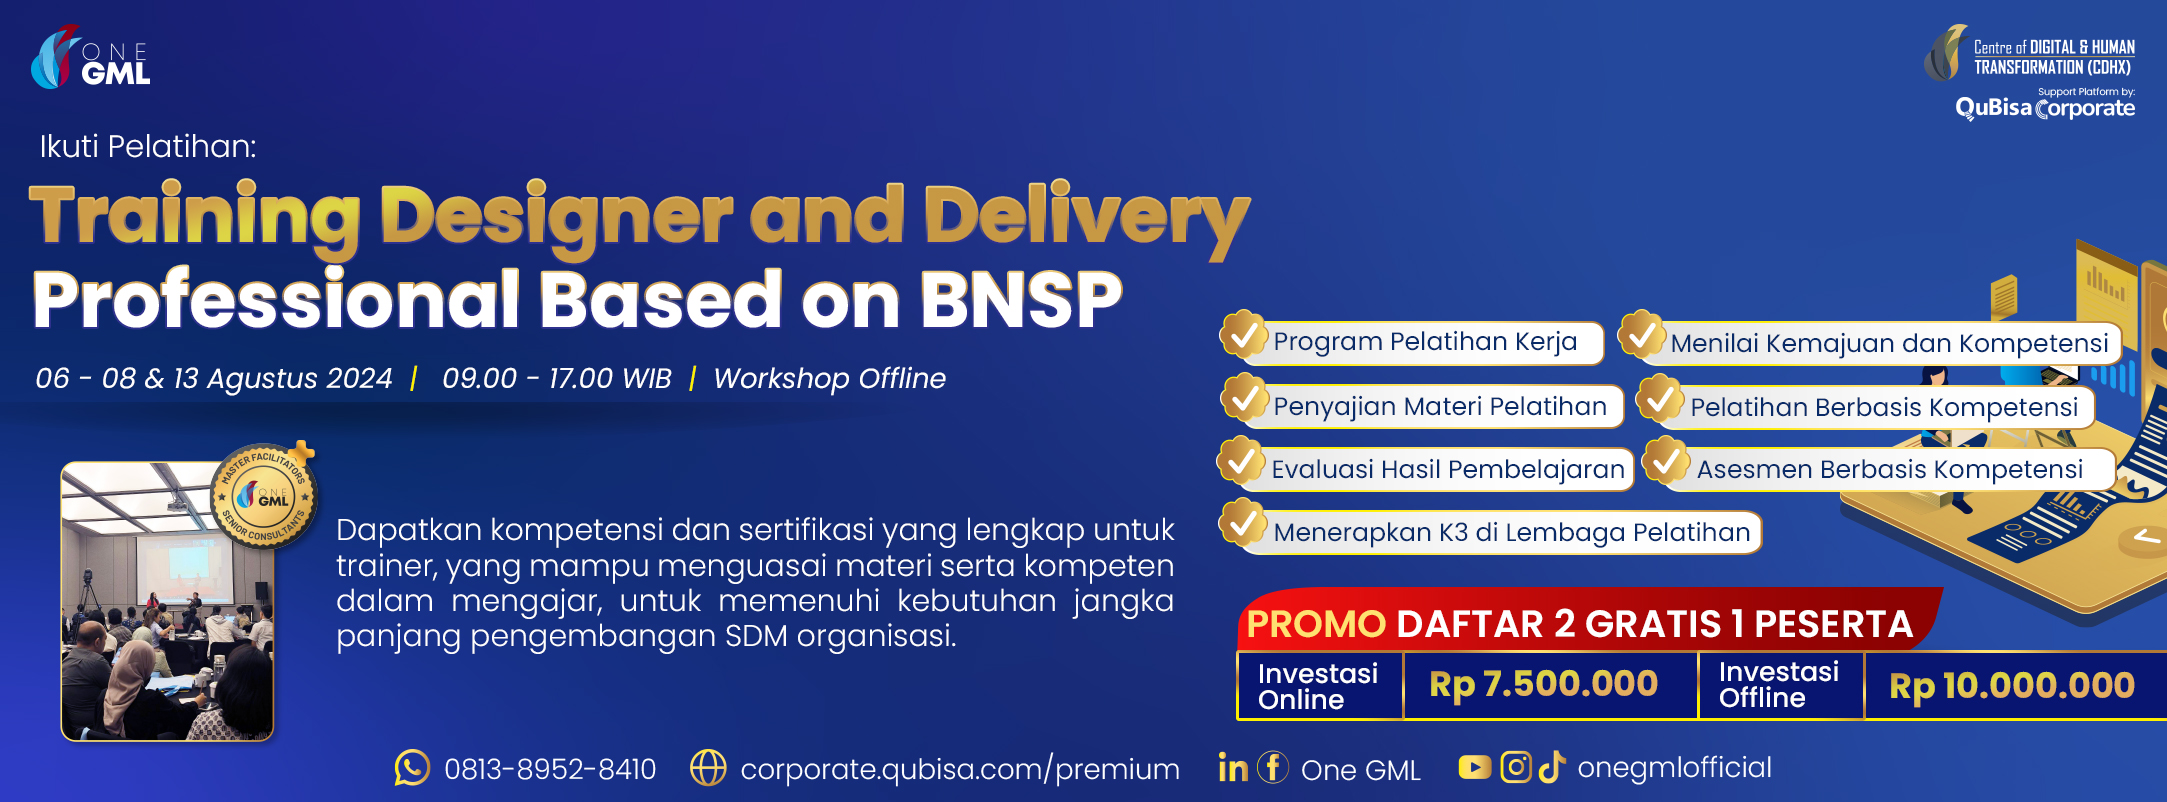 Training Designer and Delivery Professional Based on BNSP BANNER.jpg